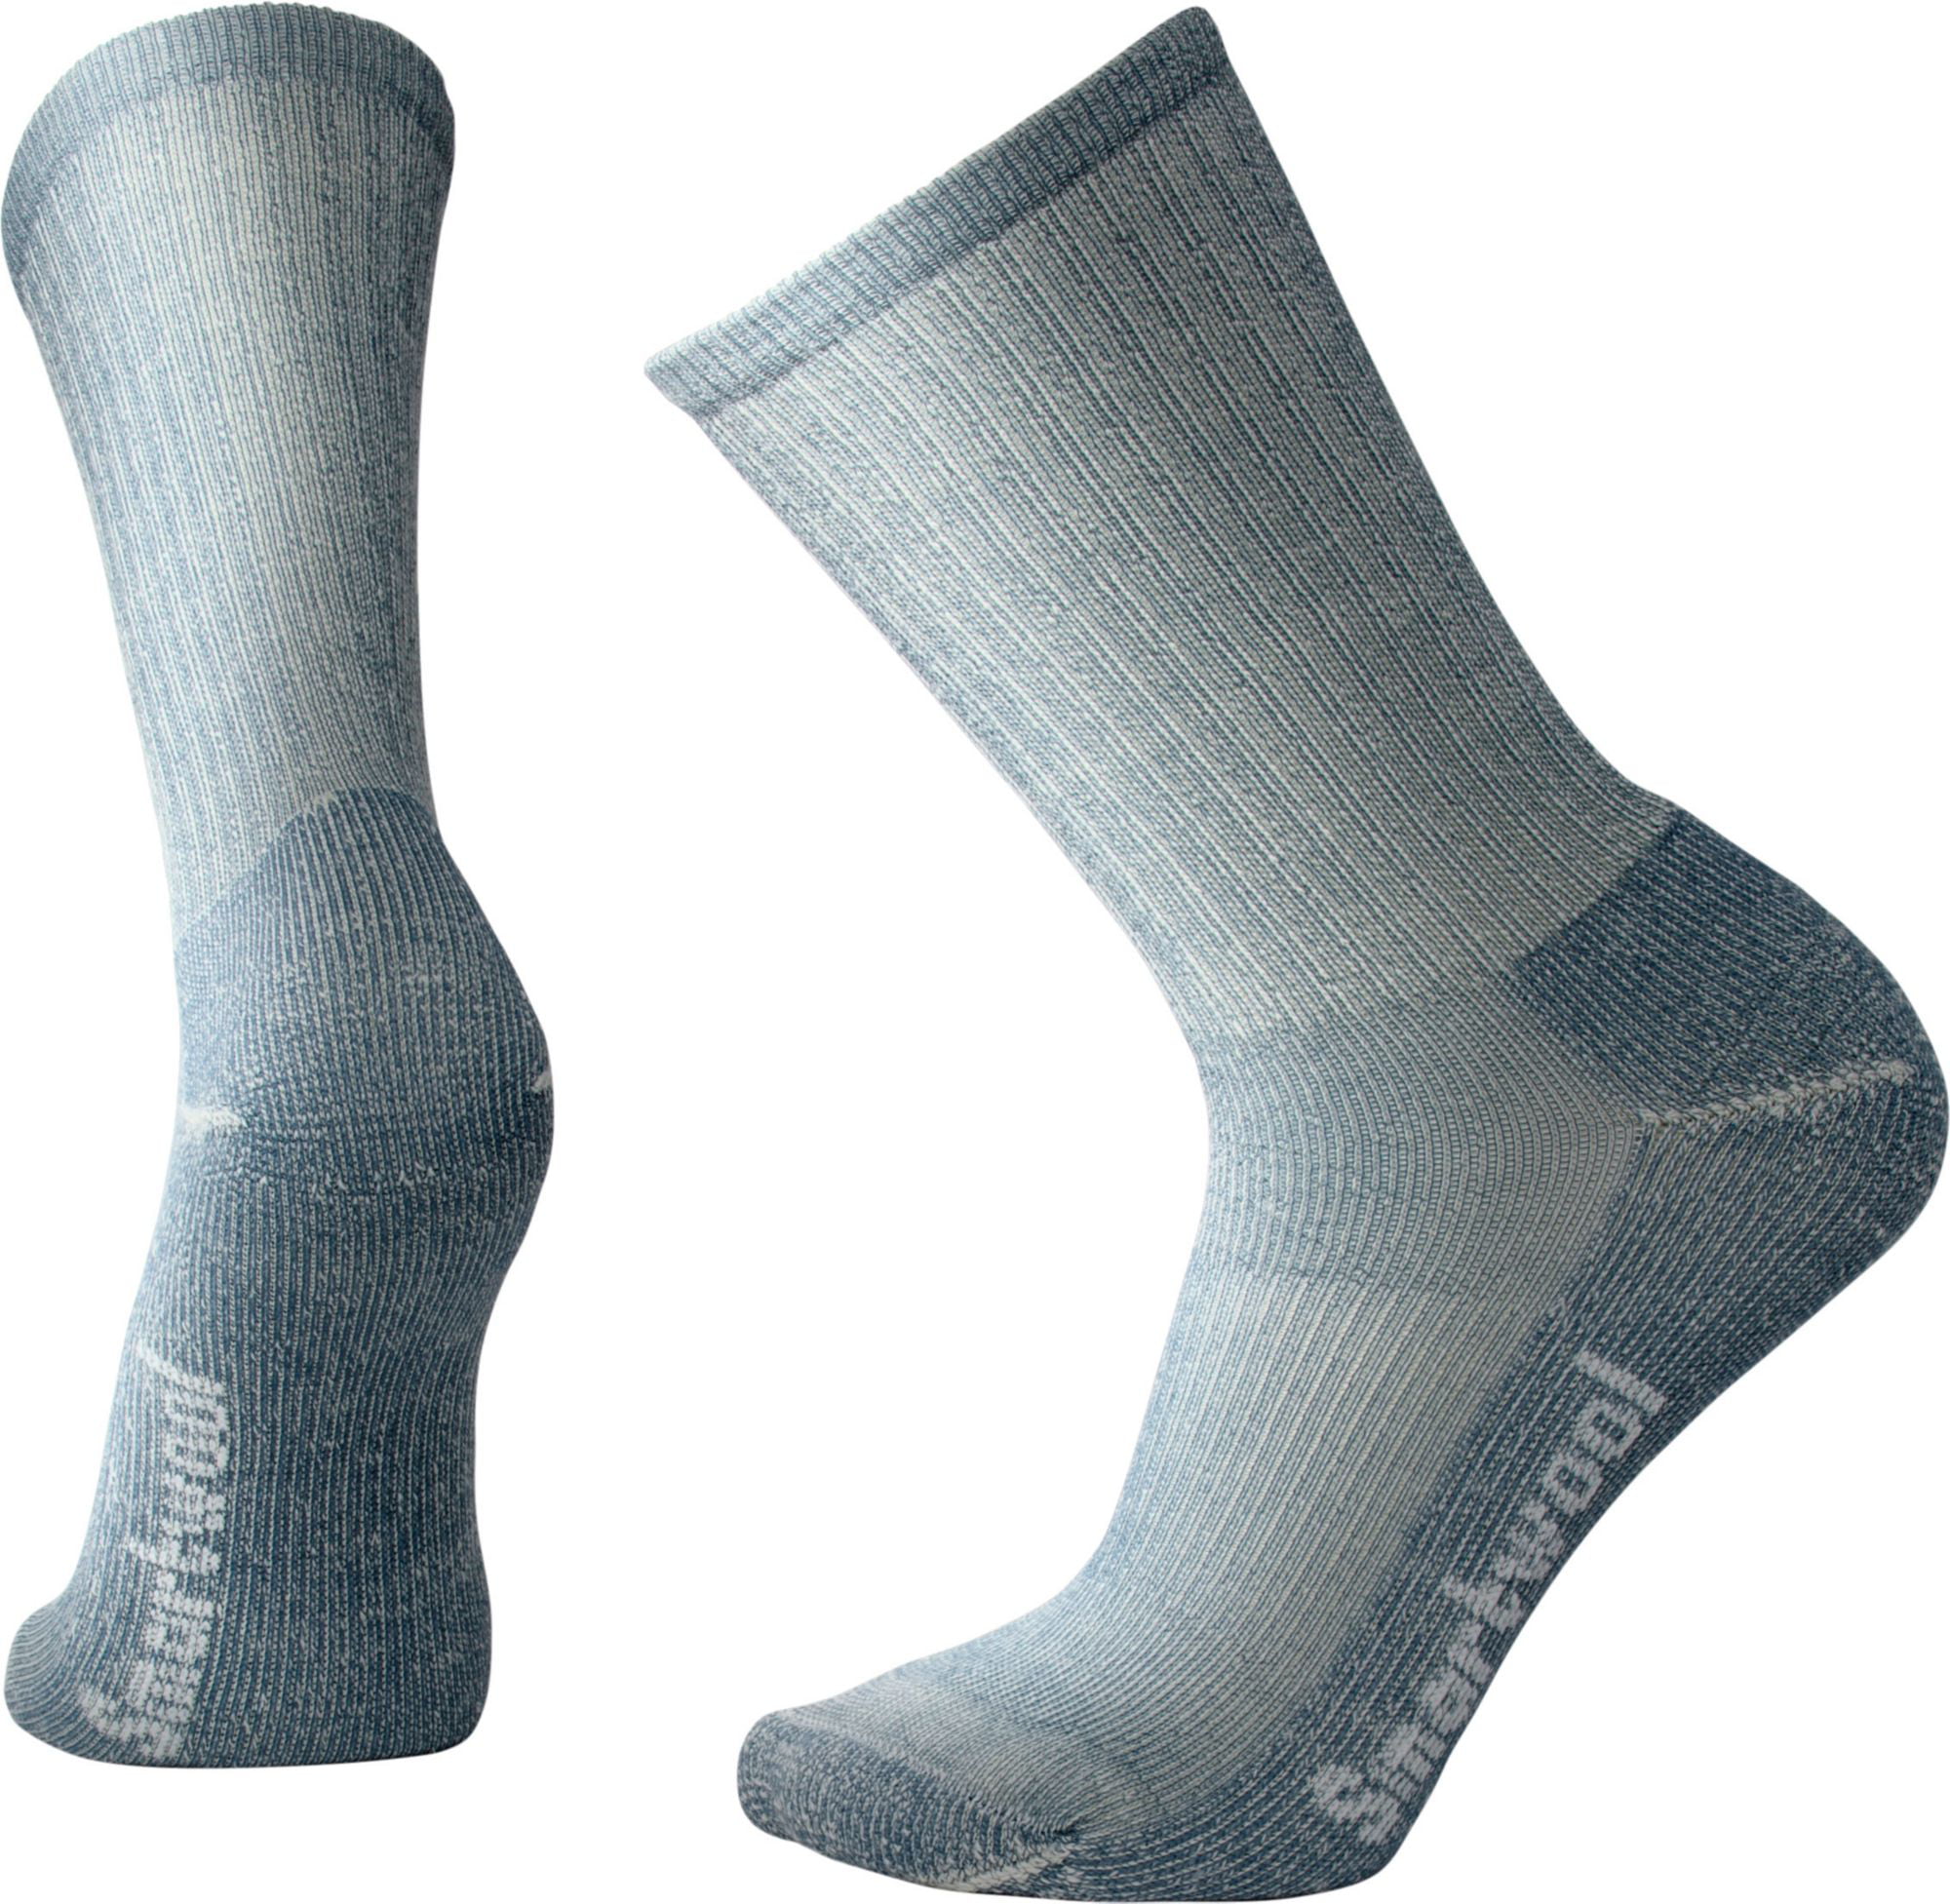 Smartwool Men's Socks Size Chart